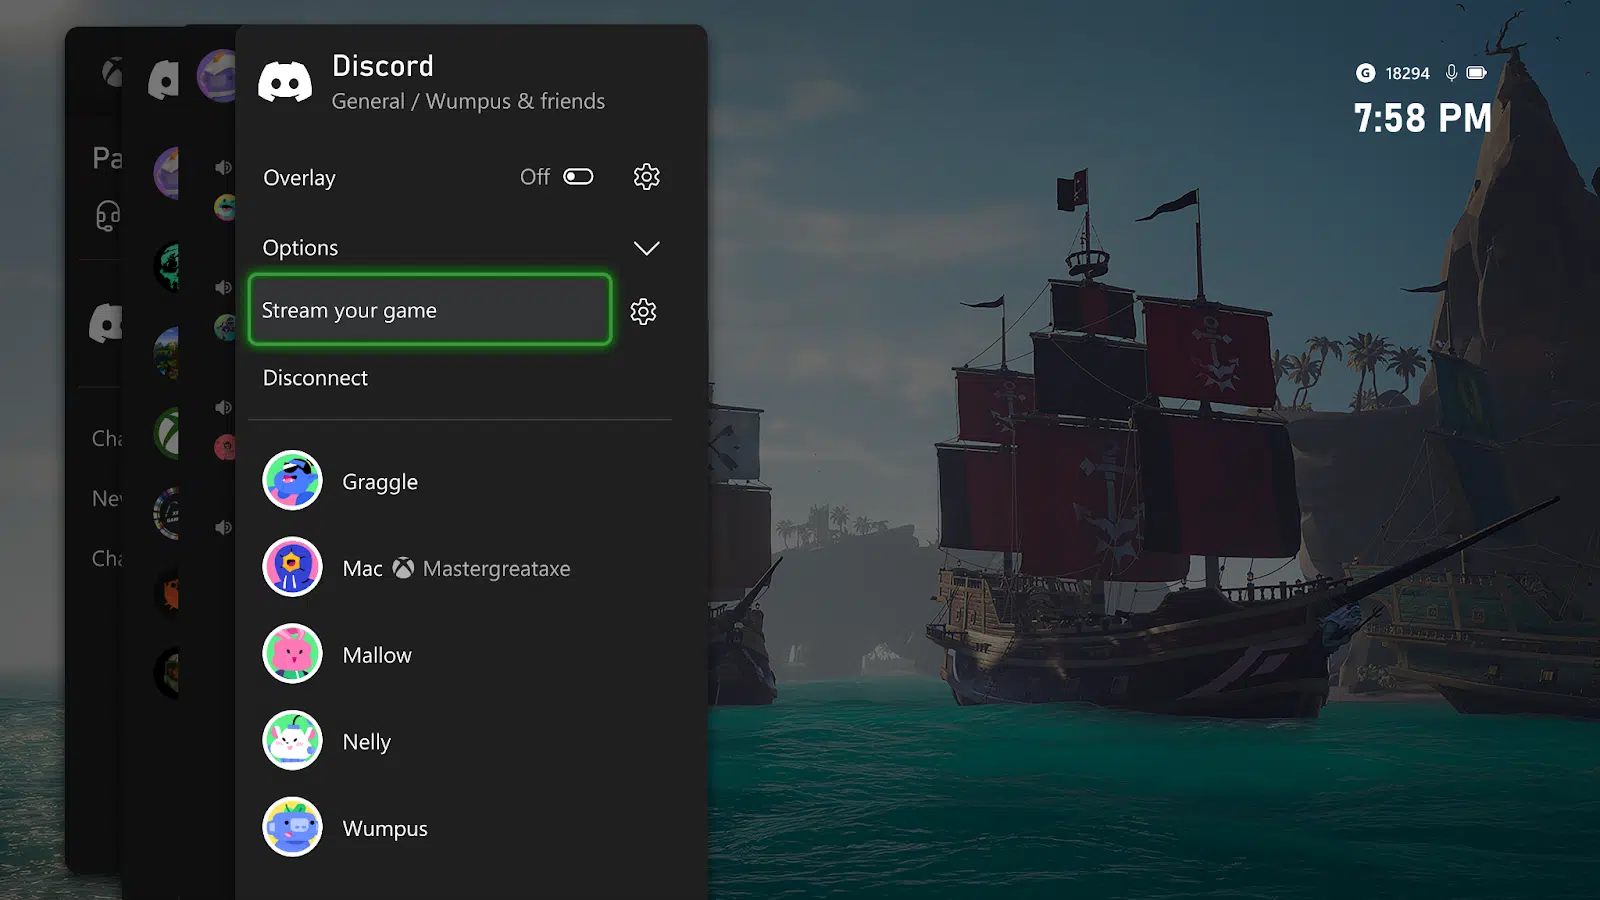 Xbox Discord Streaming